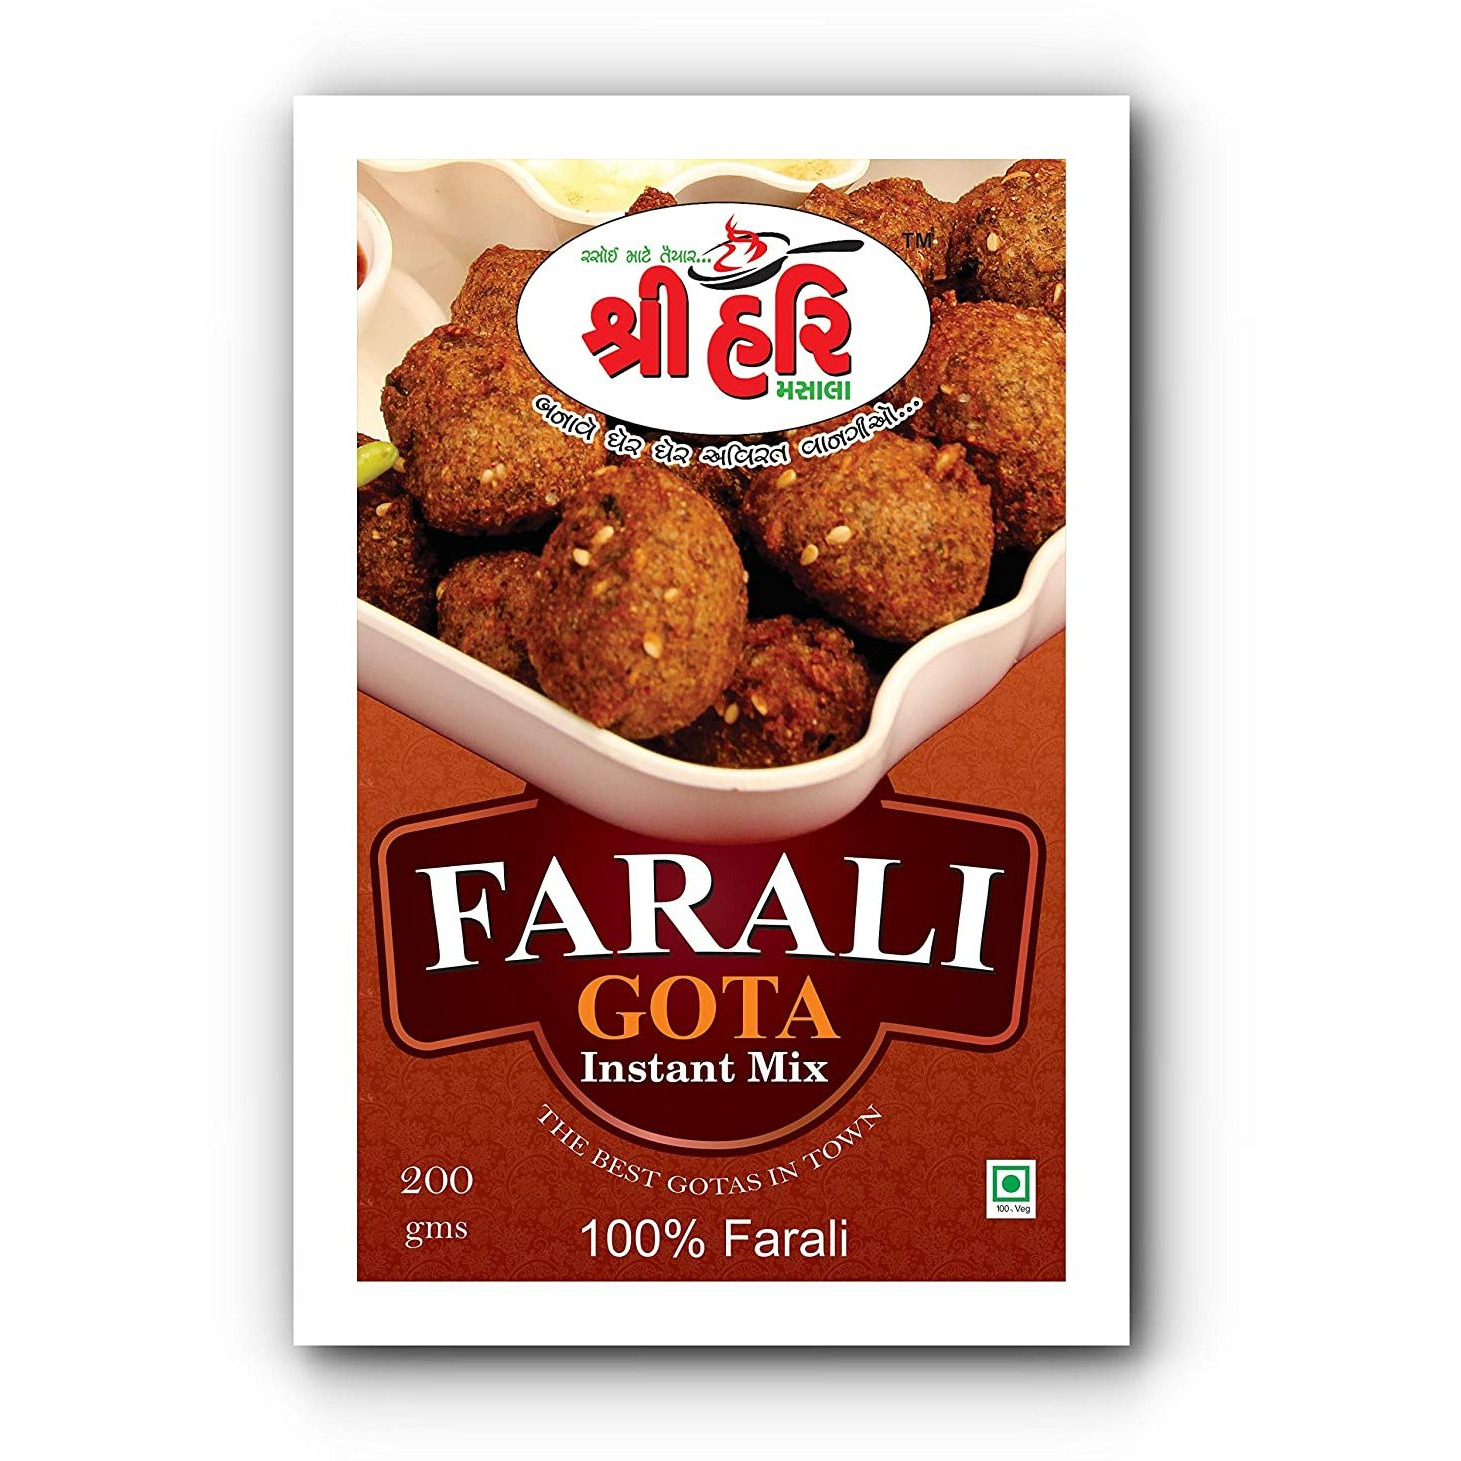 Hari's Farali Gota Instant Mix 200 gms